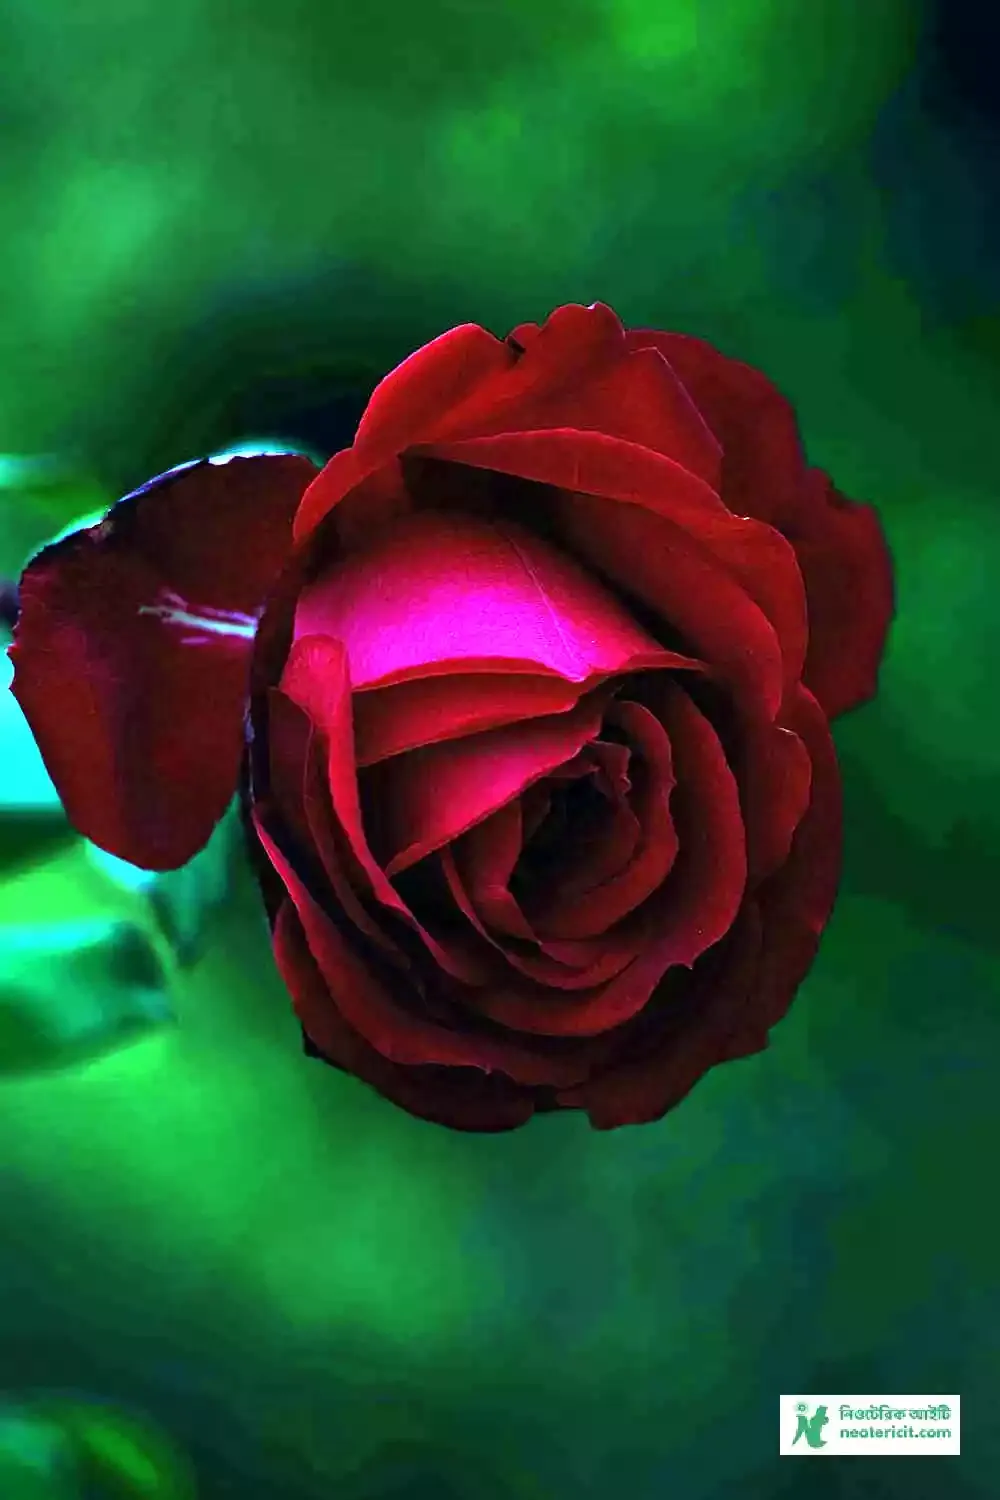 Red Rose Flower Images - Flower Images - Flower Pic 2023 Images - Flower Pictures Download - Various Flower Images - fuller chobi - NeotericIT.com - Image no 10